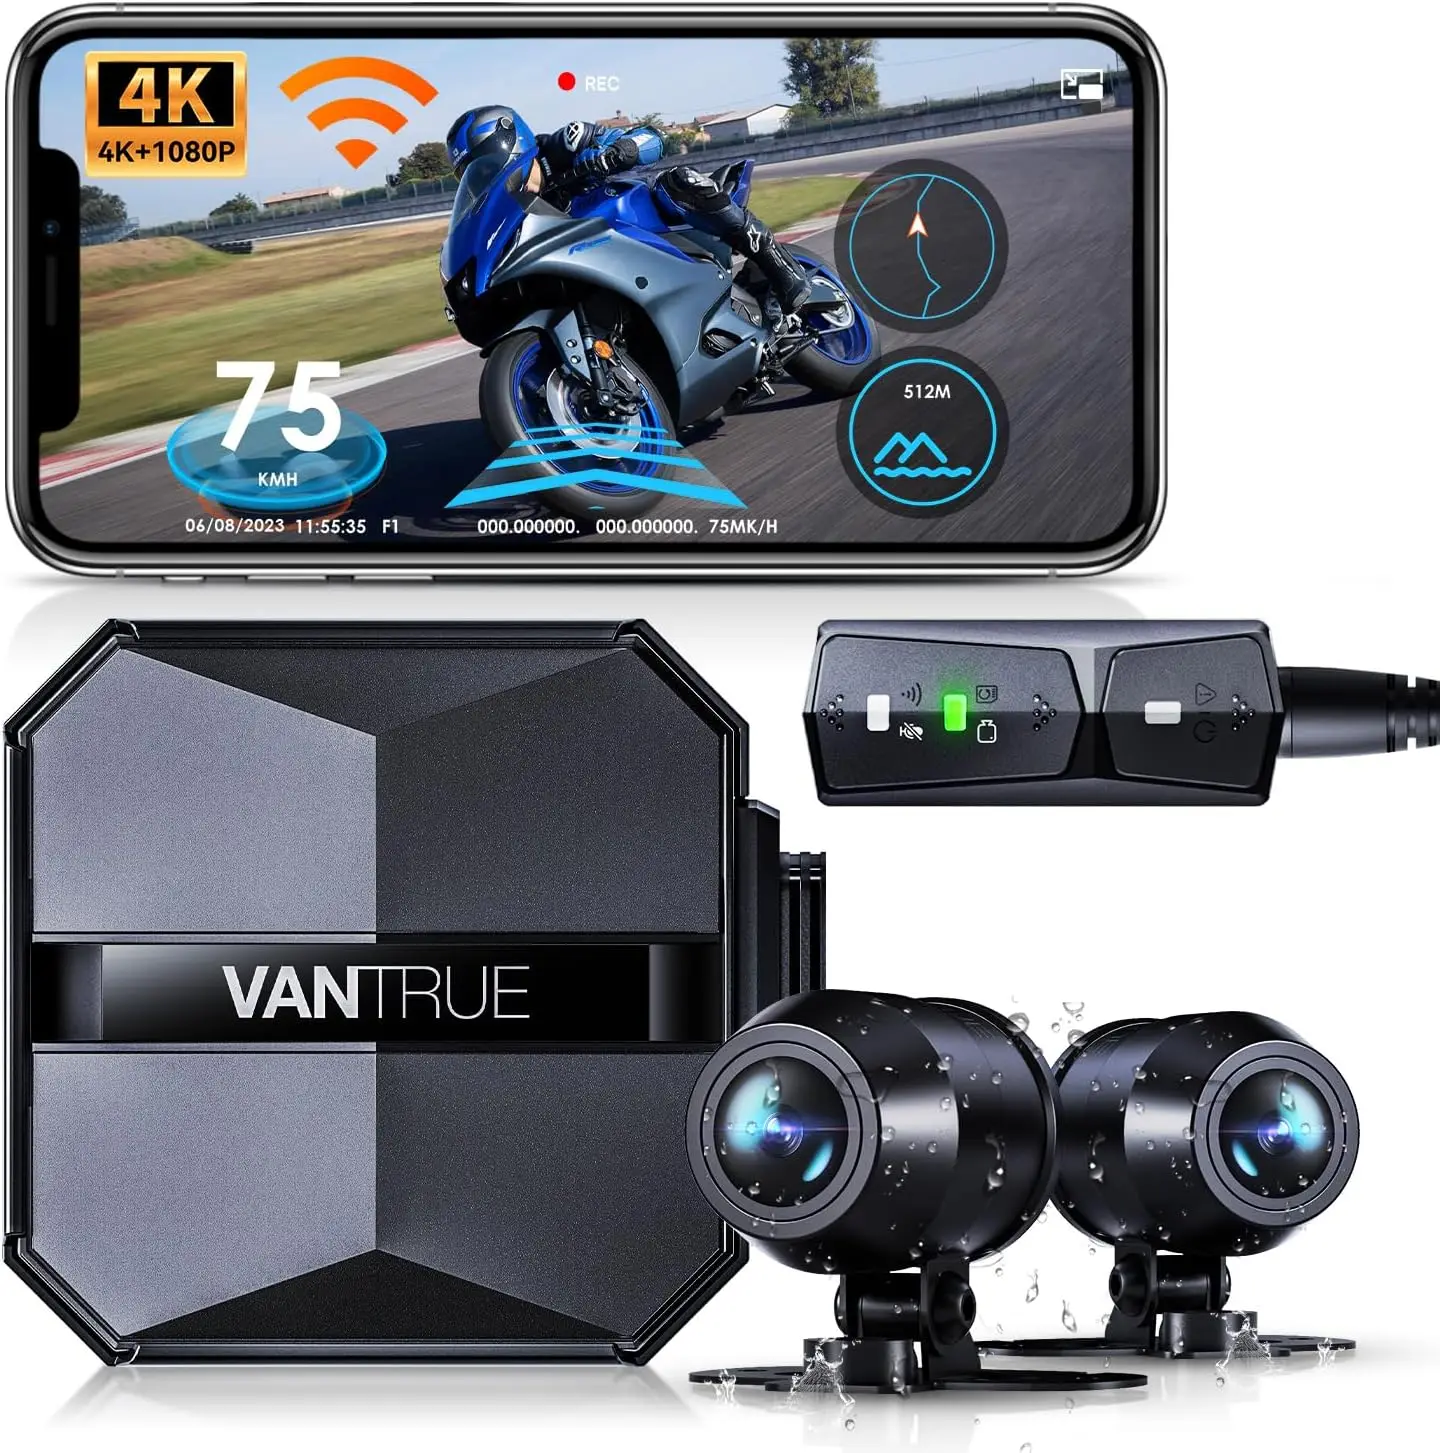 Vantrue F1 Motorcycle 4K Front and Rear Dash Cam, 4K + 1080P Motorcycle Camera, GPS, Full Body Waterproof, Wi-Fi